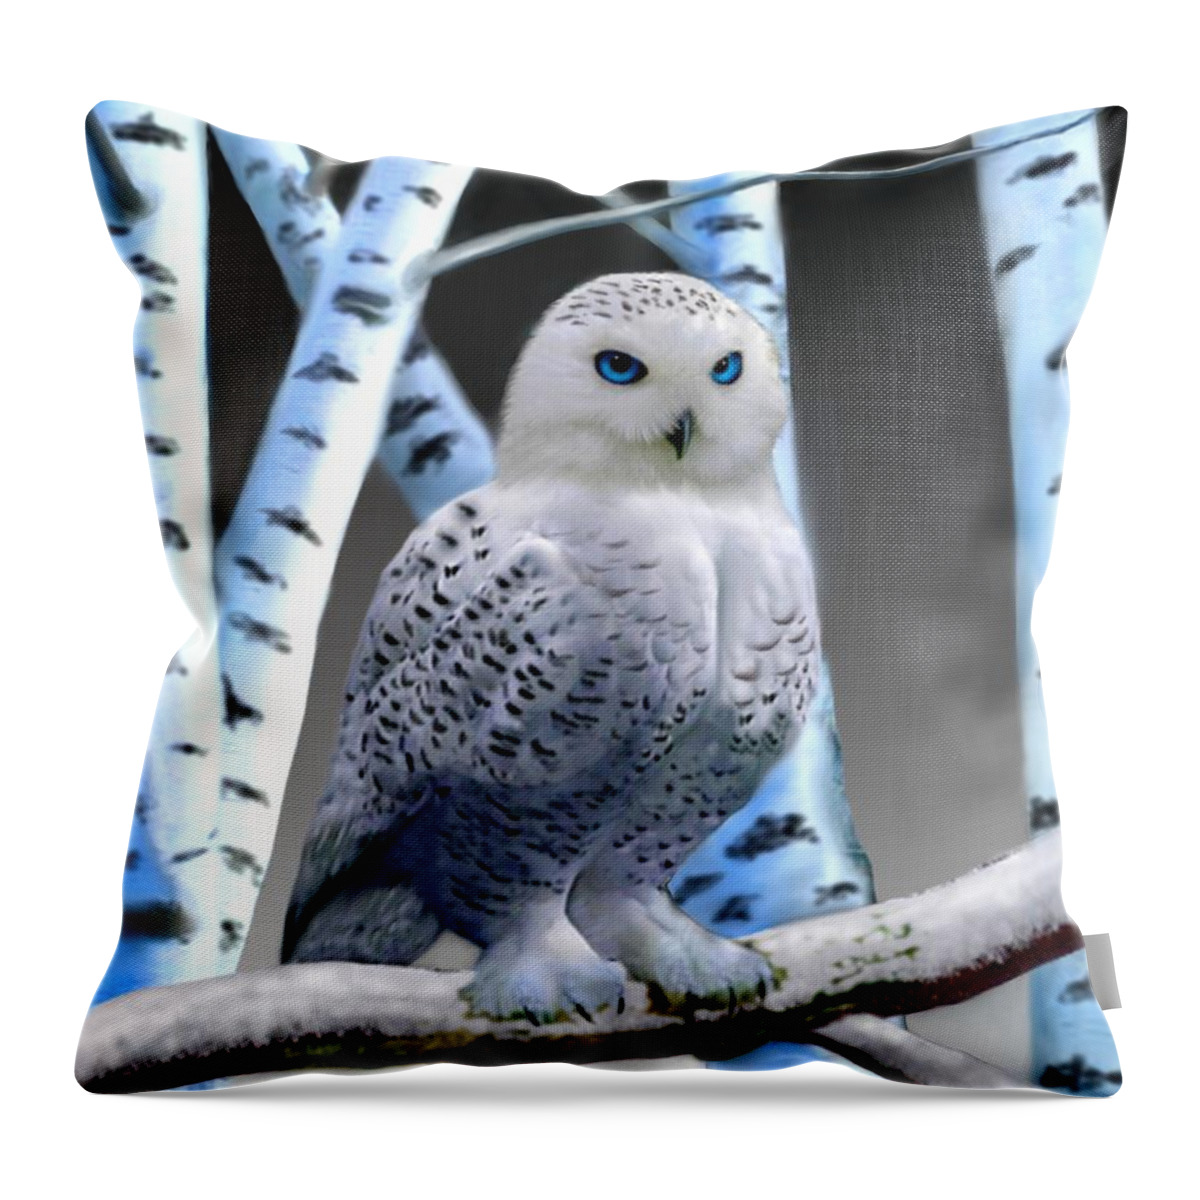 Blue-eyed Snow Owl Throw Pillow featuring the digital art Blue-eyed Snow Owl by Glenn Holbrook